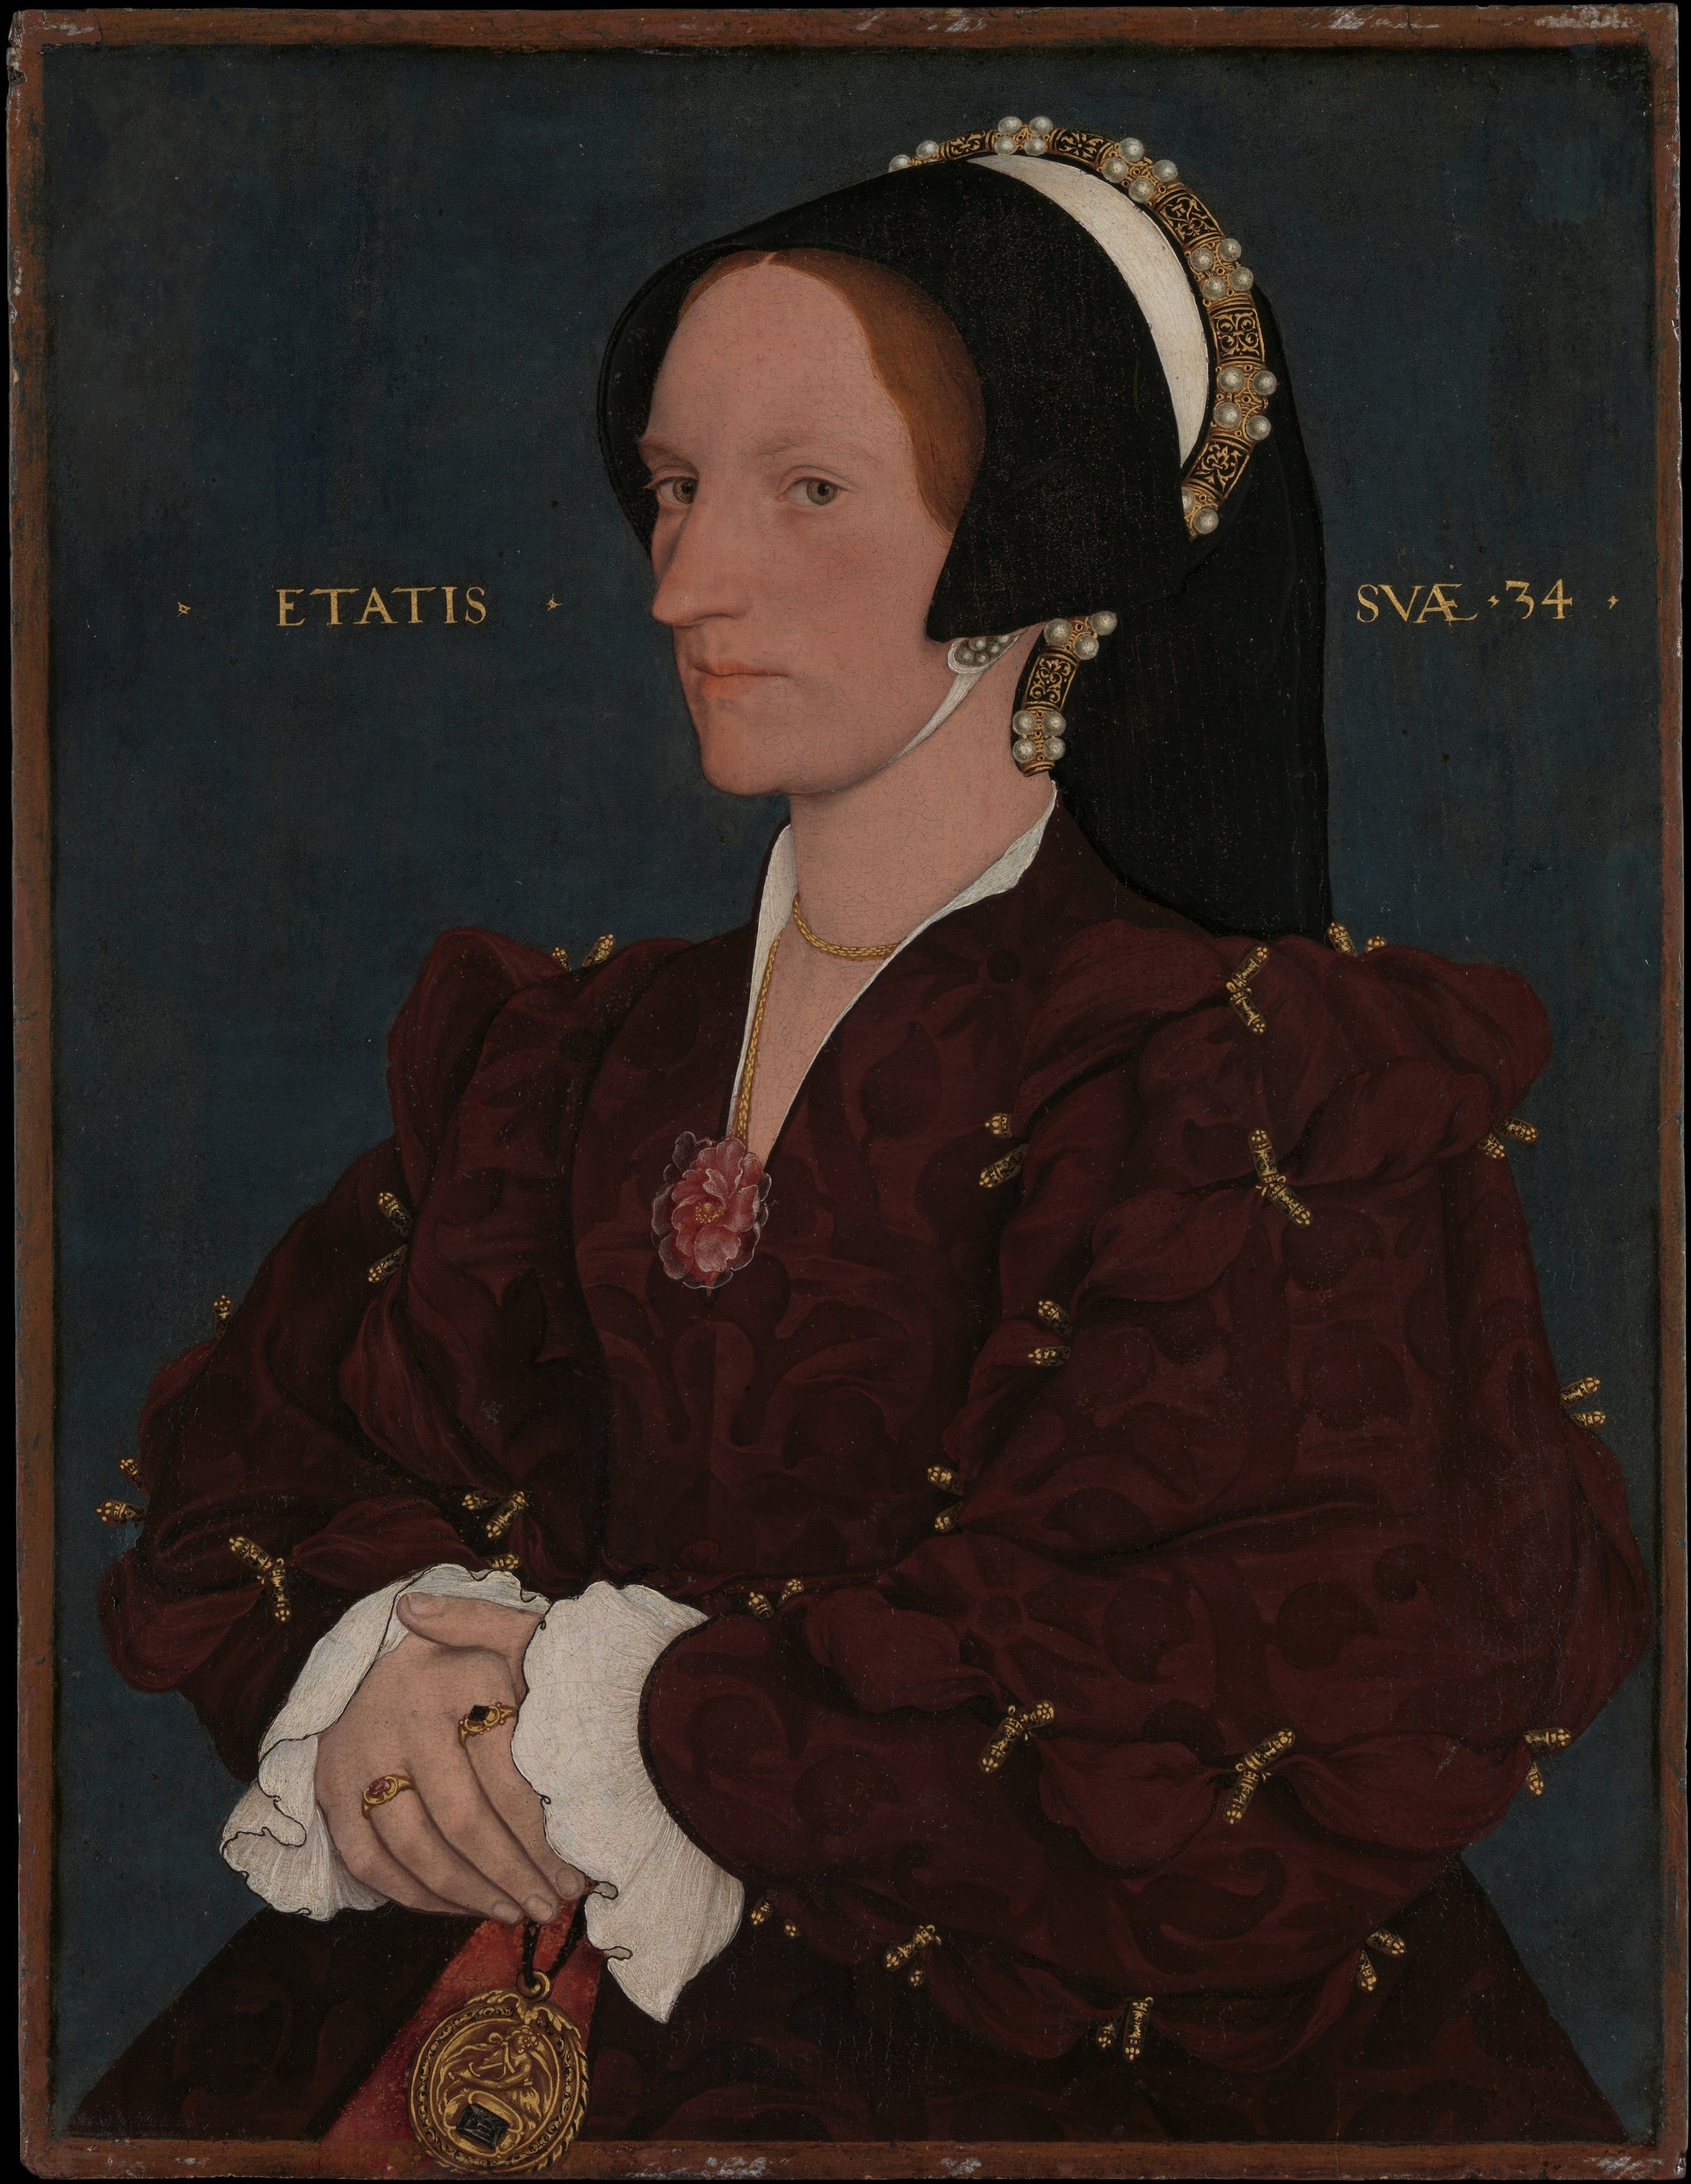 Margaret Wyatt, lady Lee by Hans Holbein le Jeune - 1540 - 42.5 x 32.7 cm Metropolitan Museum of Art